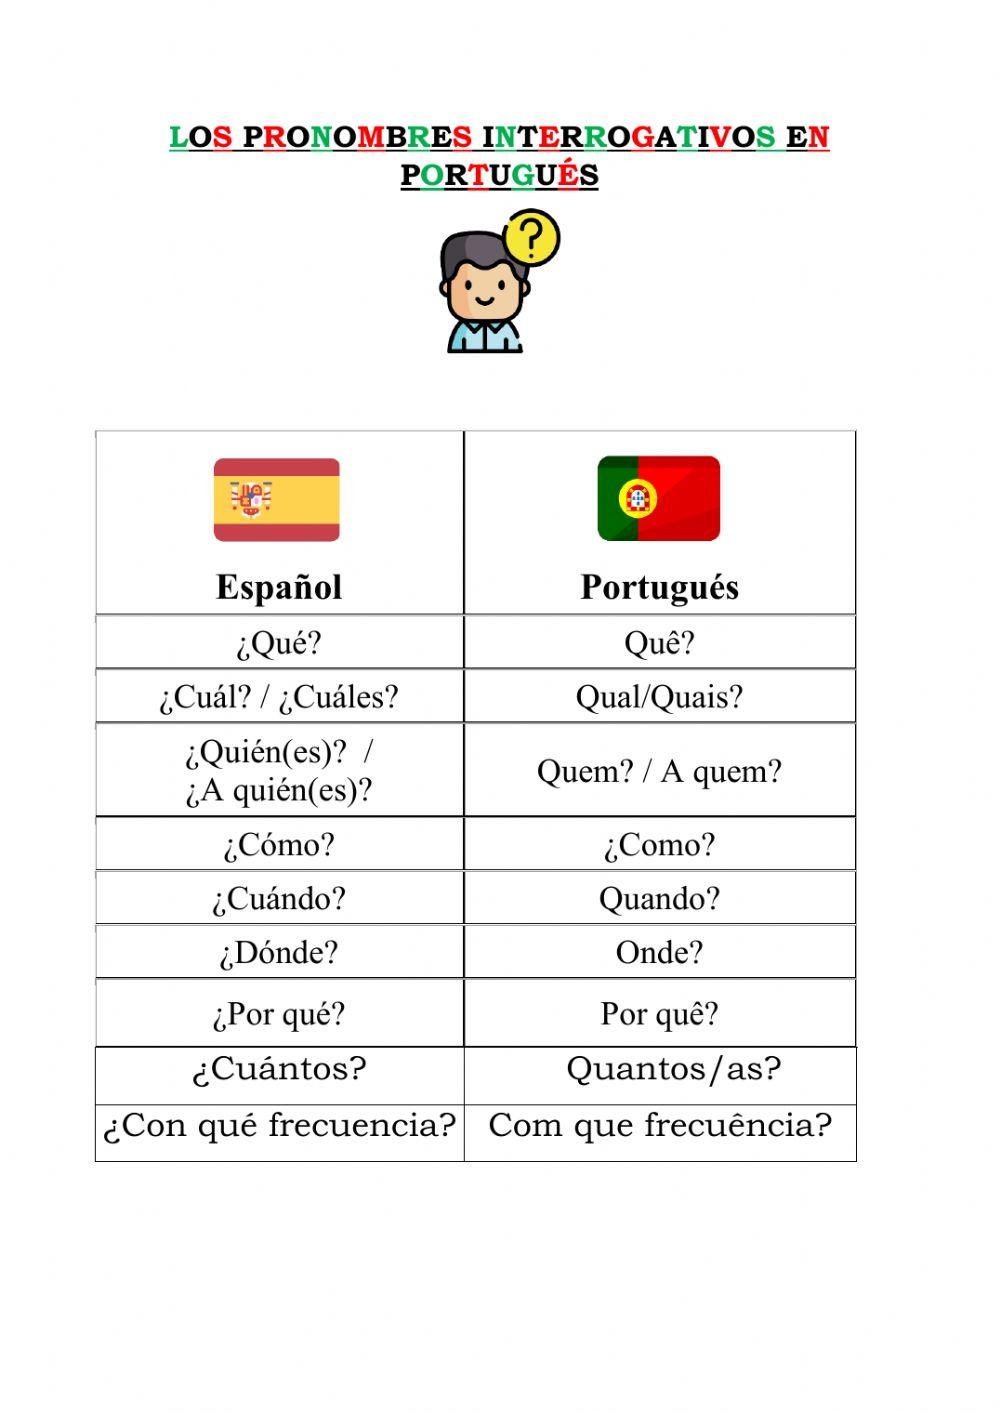 Los pronombres interrogatuvis en portugués